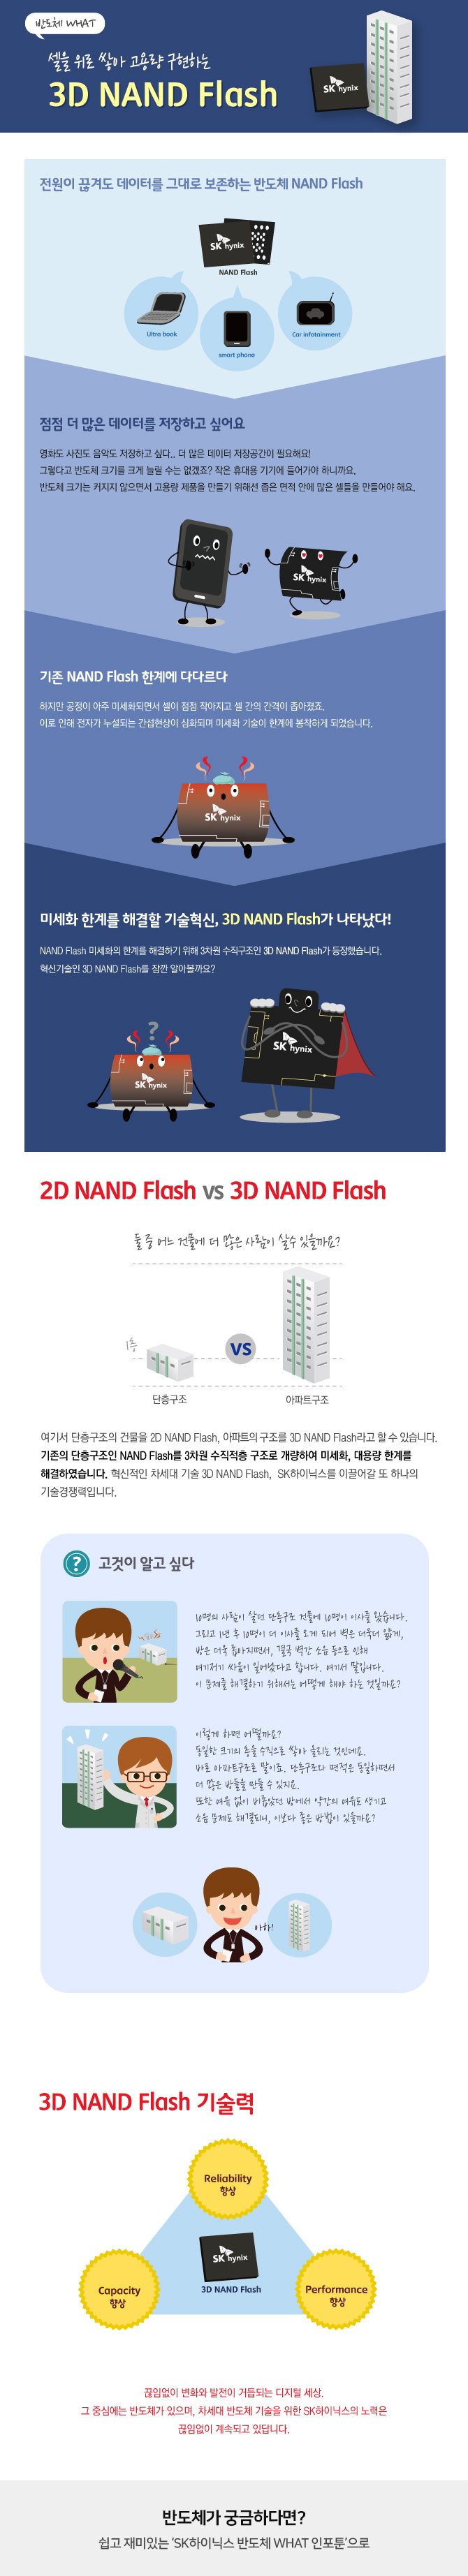 3D NAND Flash